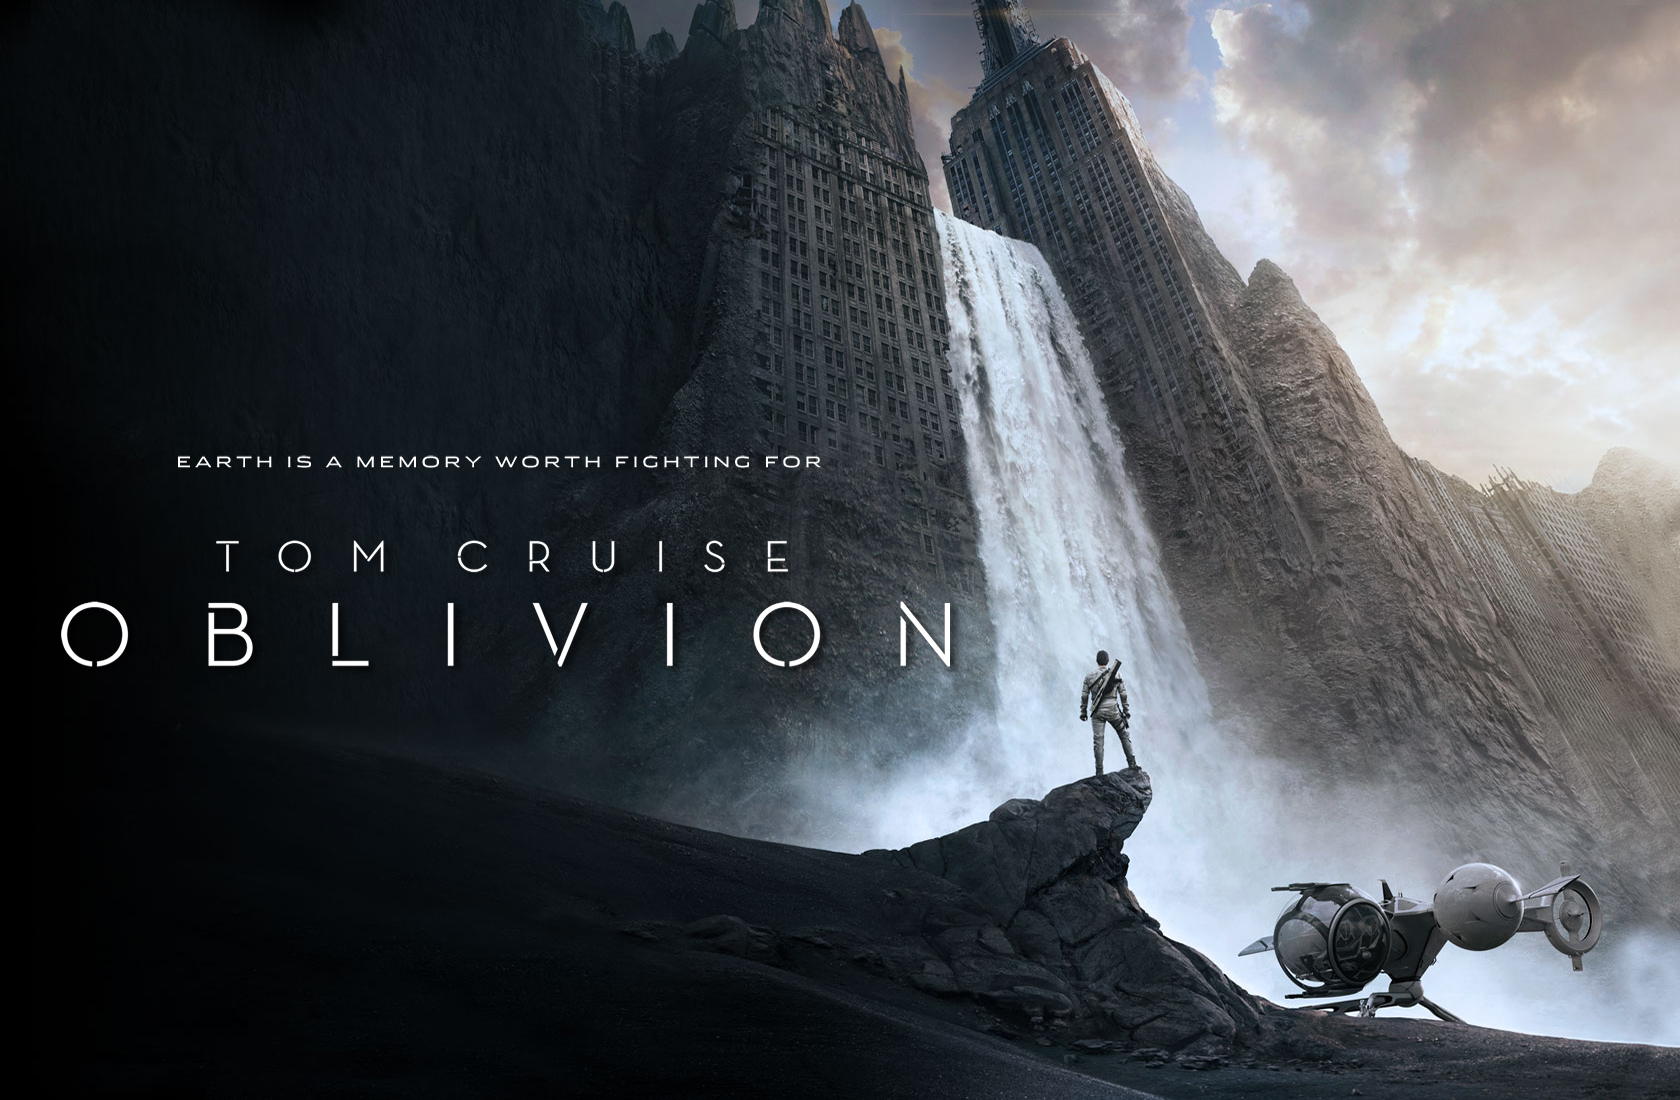 Movie Oblivion HD Wallpaper | Background Image